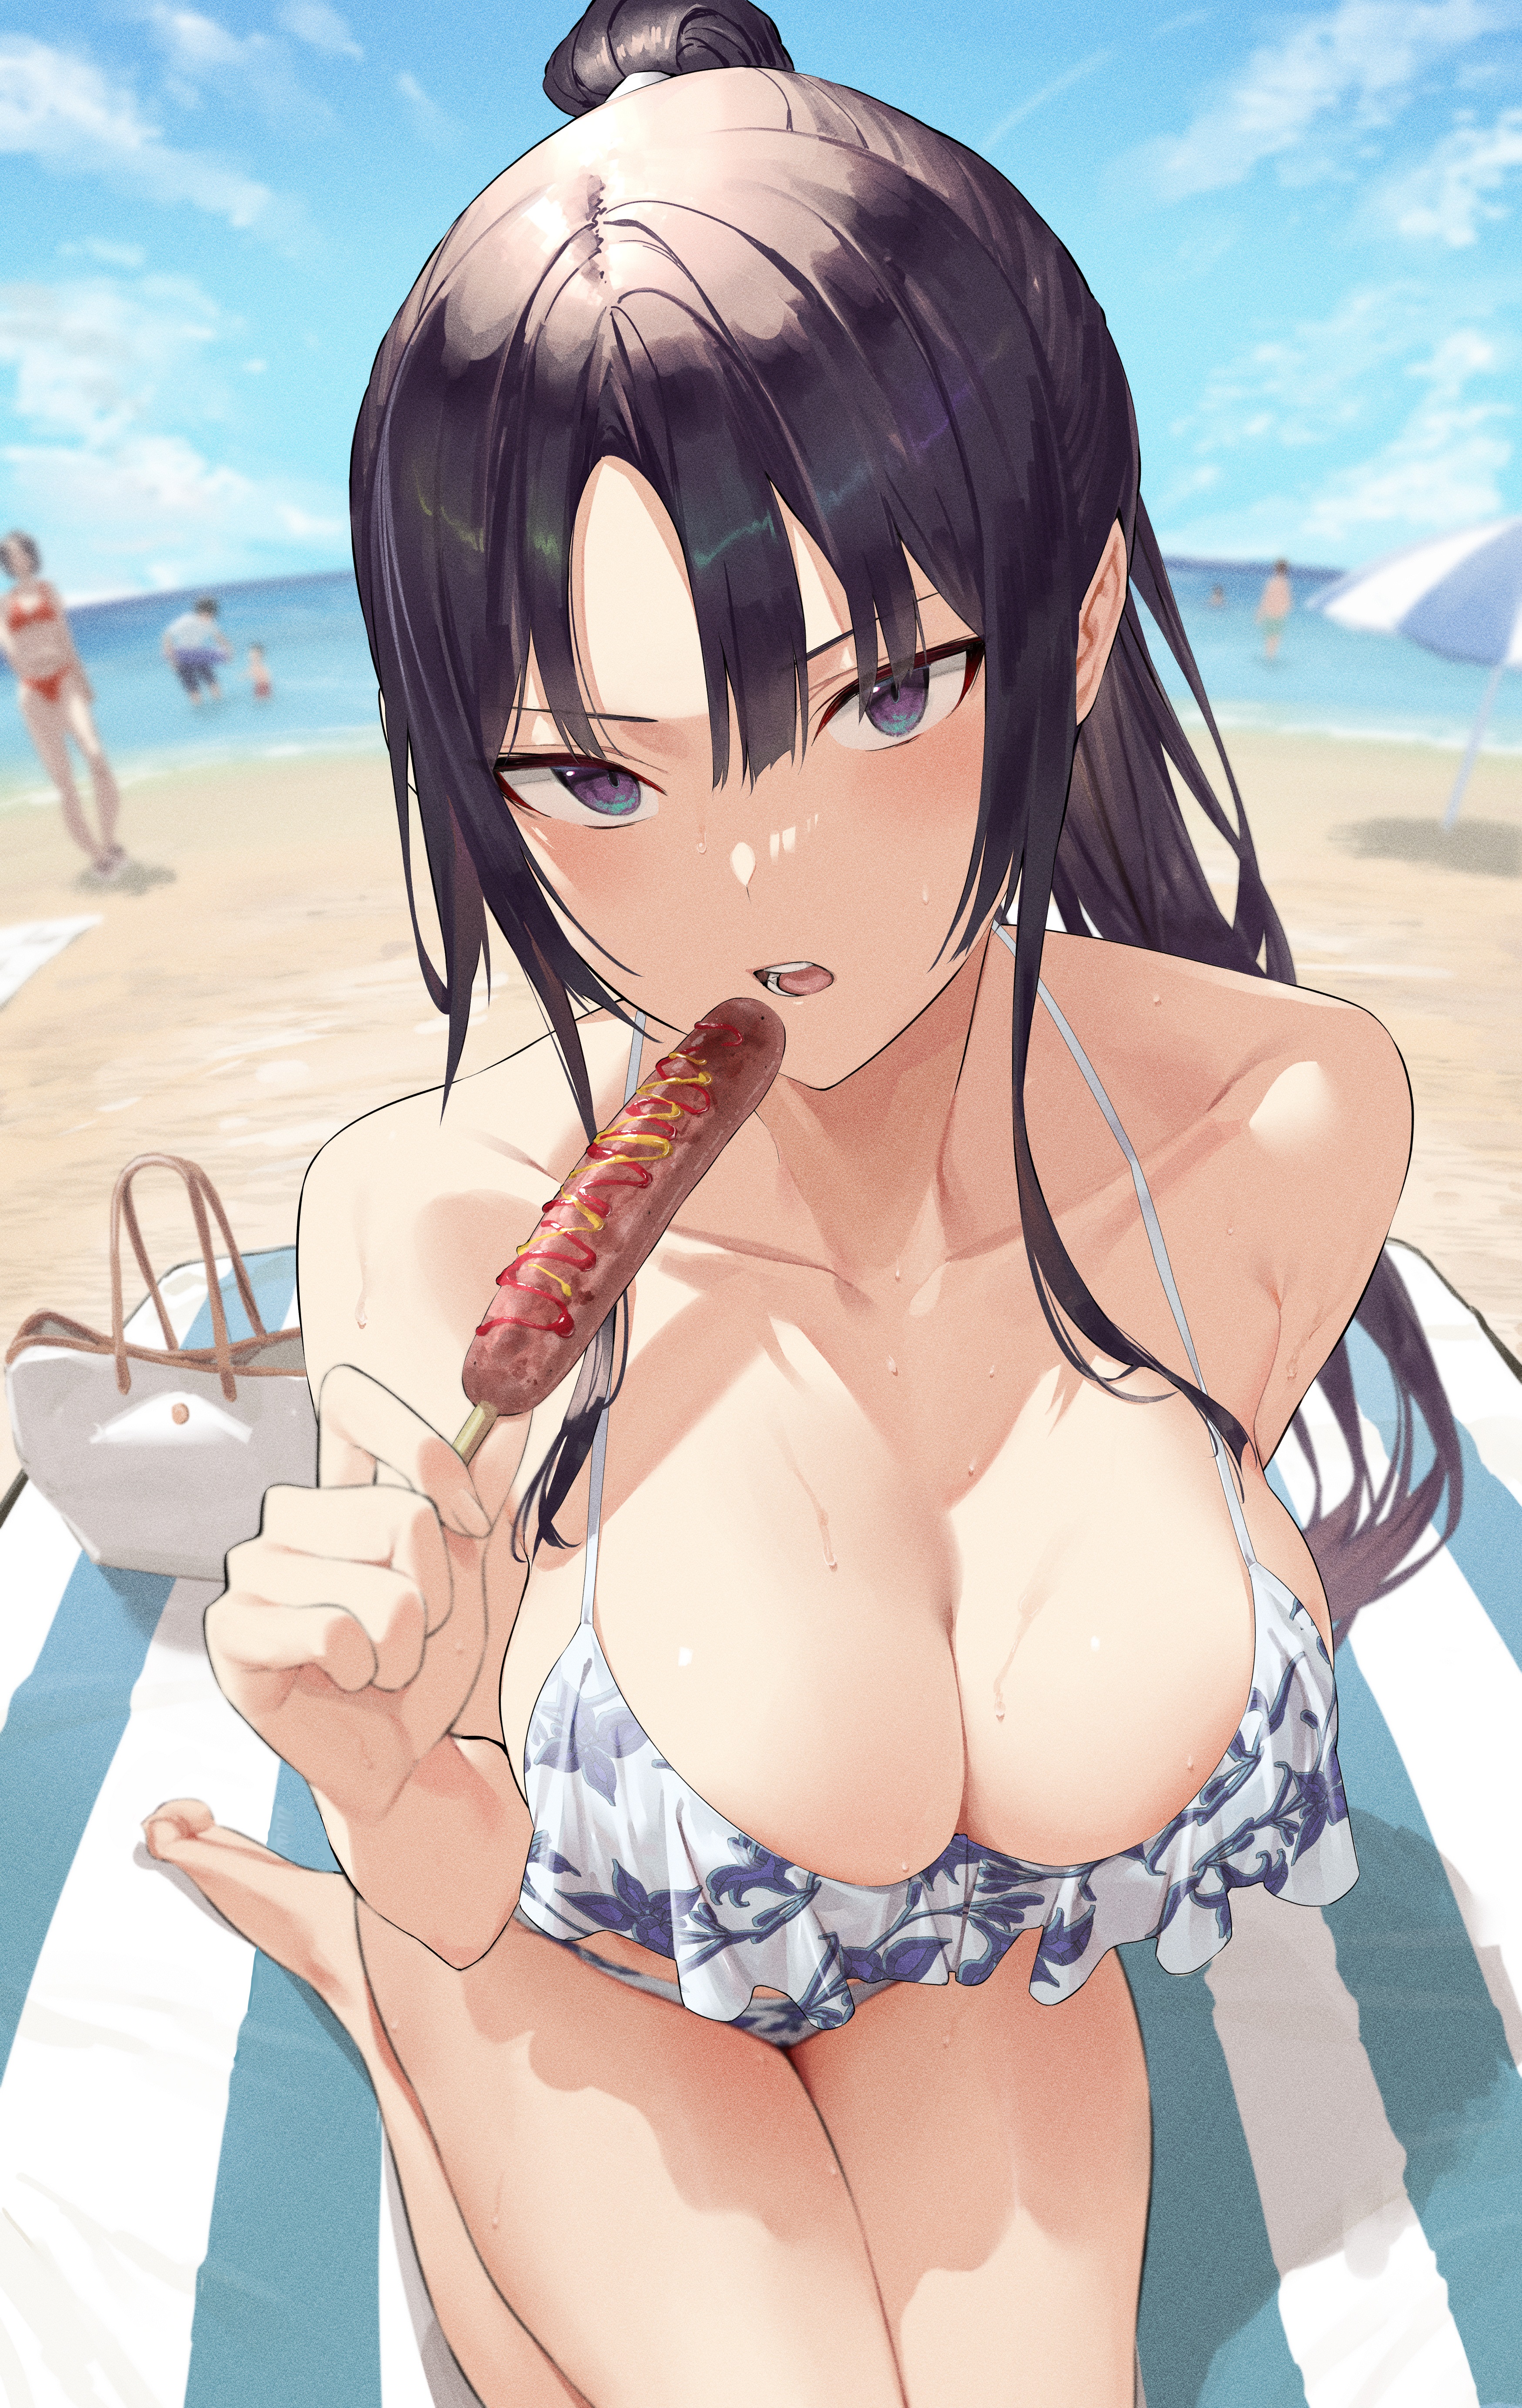 Anime 3498x5535 anime anime girls hot dogs cleavage big boobs bikini beach kneeling phallic symbol ponytail artwork Hiiragi Yuuichi dark hair blushing